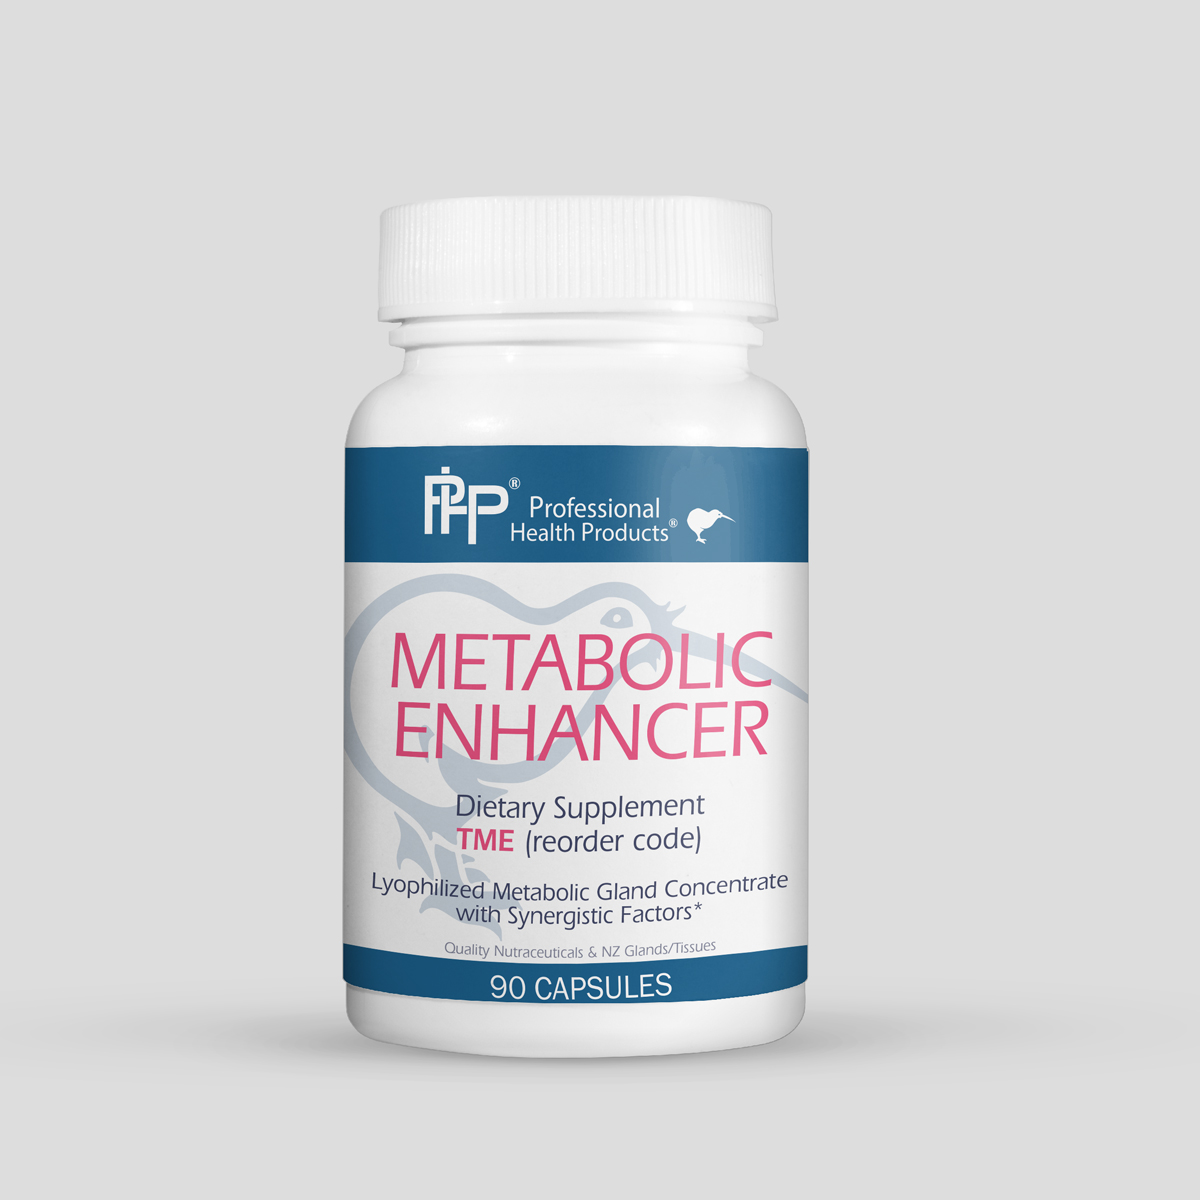 Metabolic enhancers